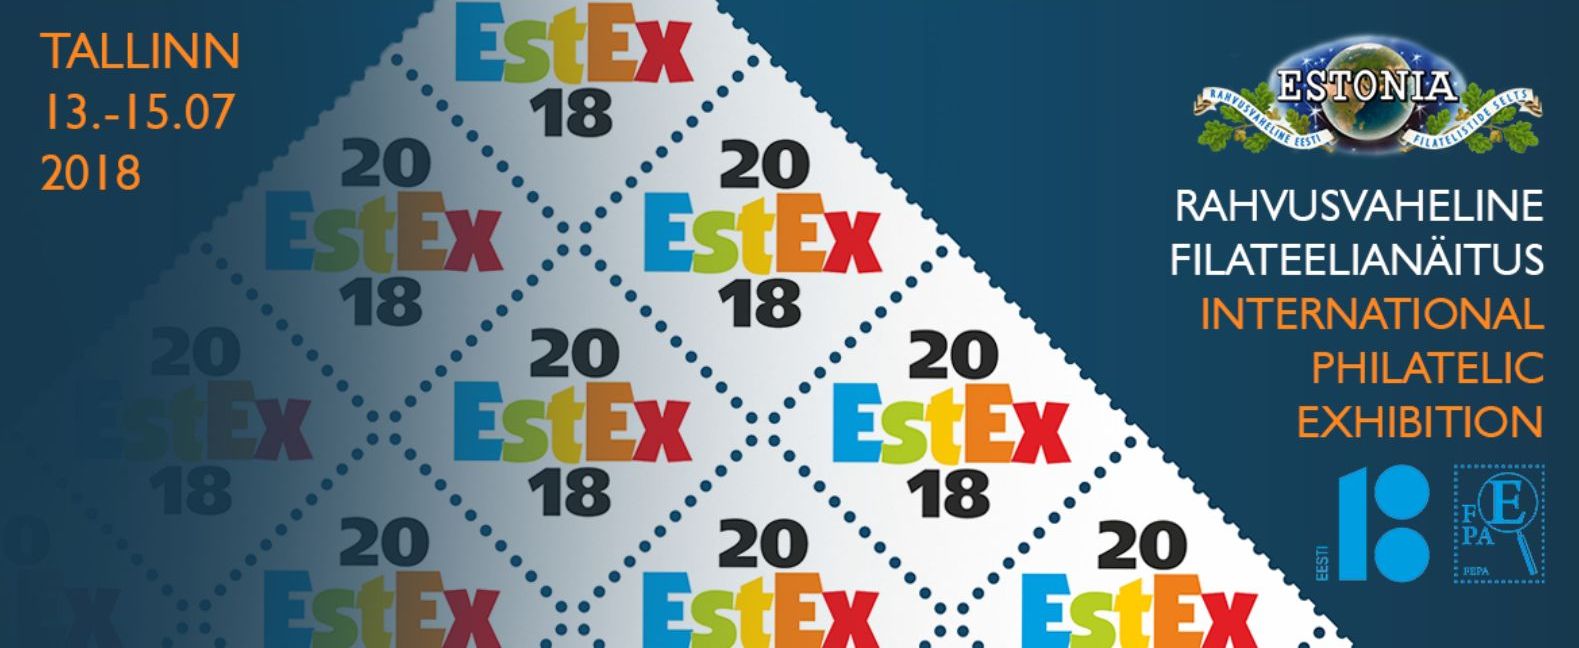 Plakat EstEx